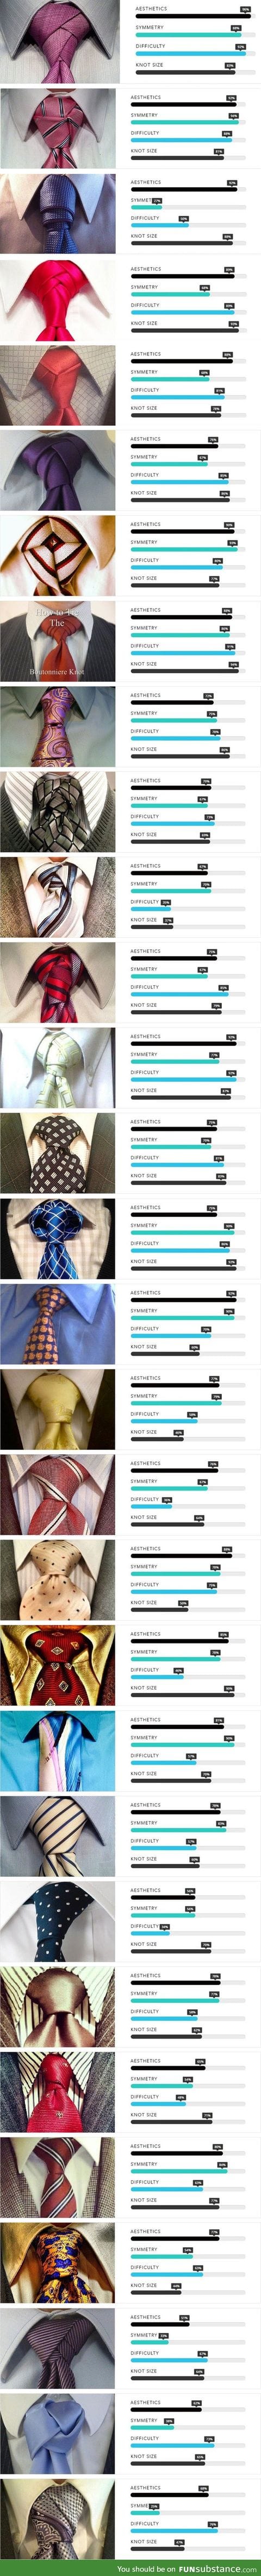 List of most popular tie knots